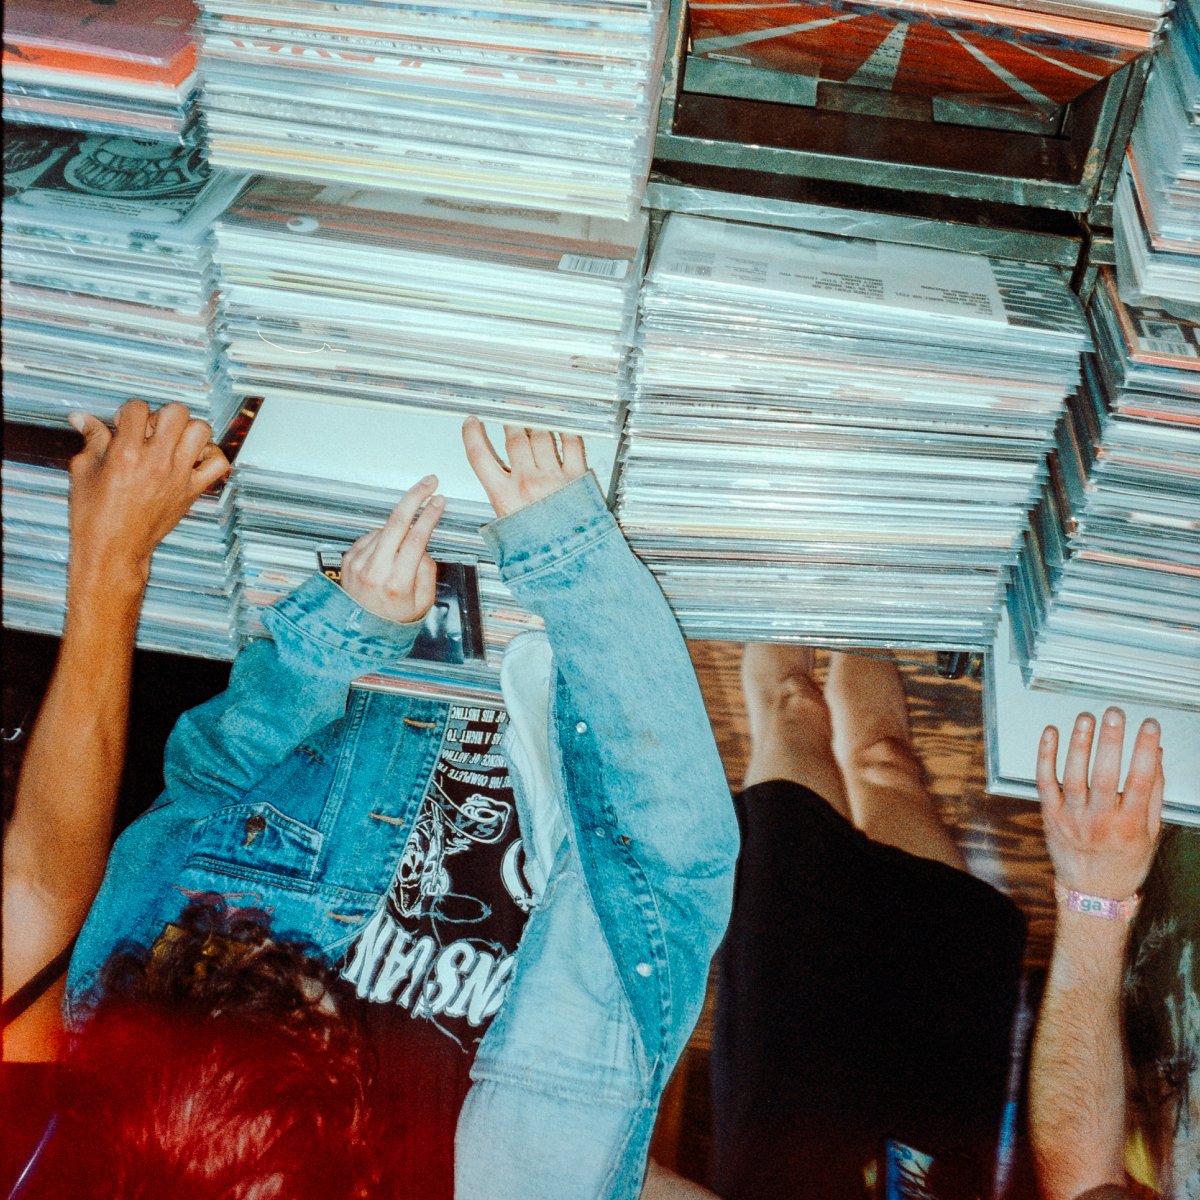 Coachella fans checking out records at Record Safari